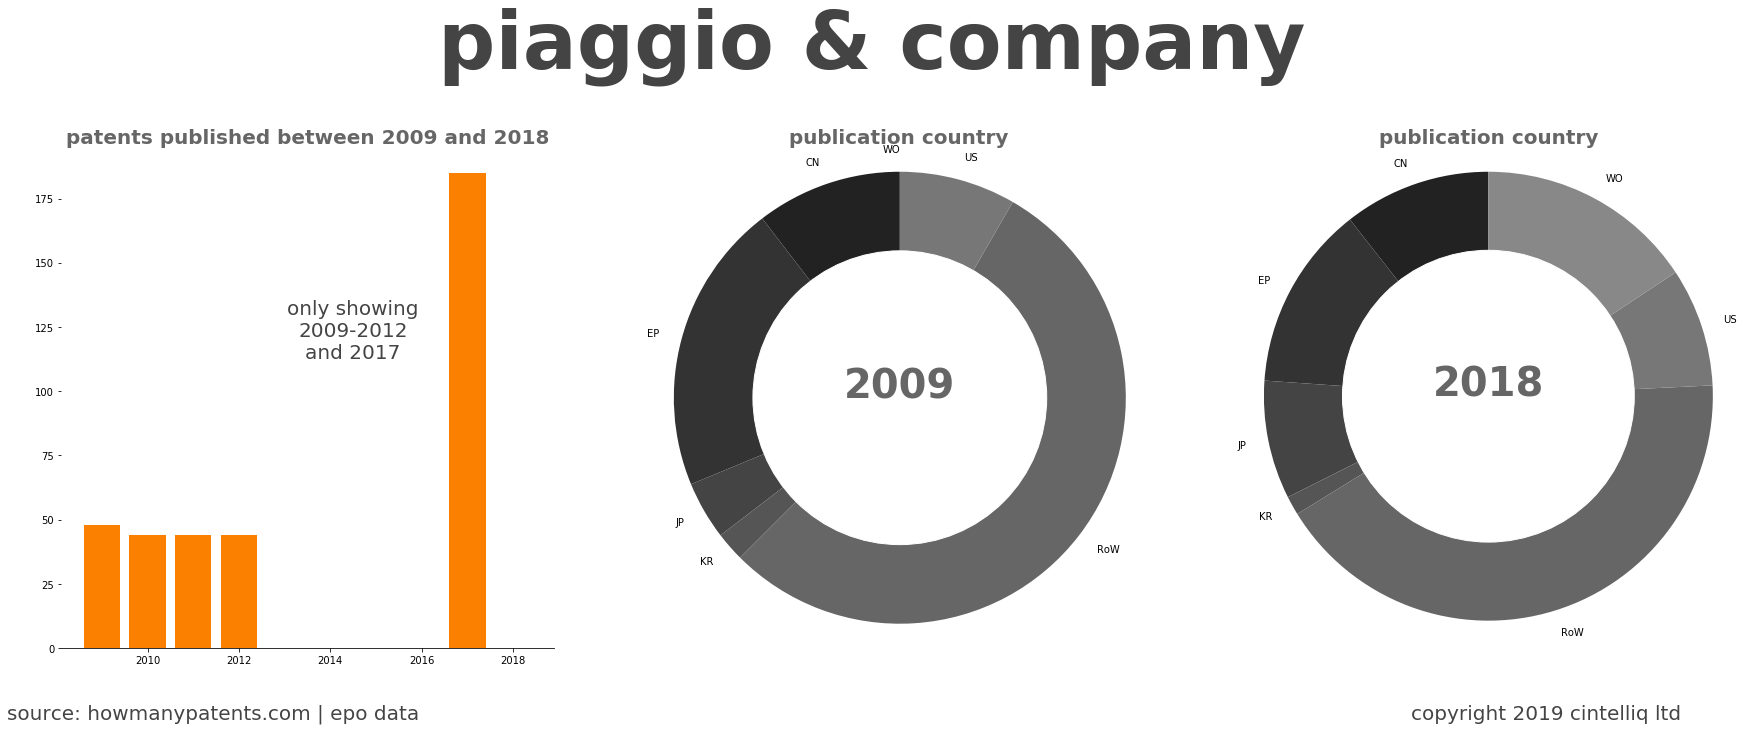 summary of patents for Piaggio & Company